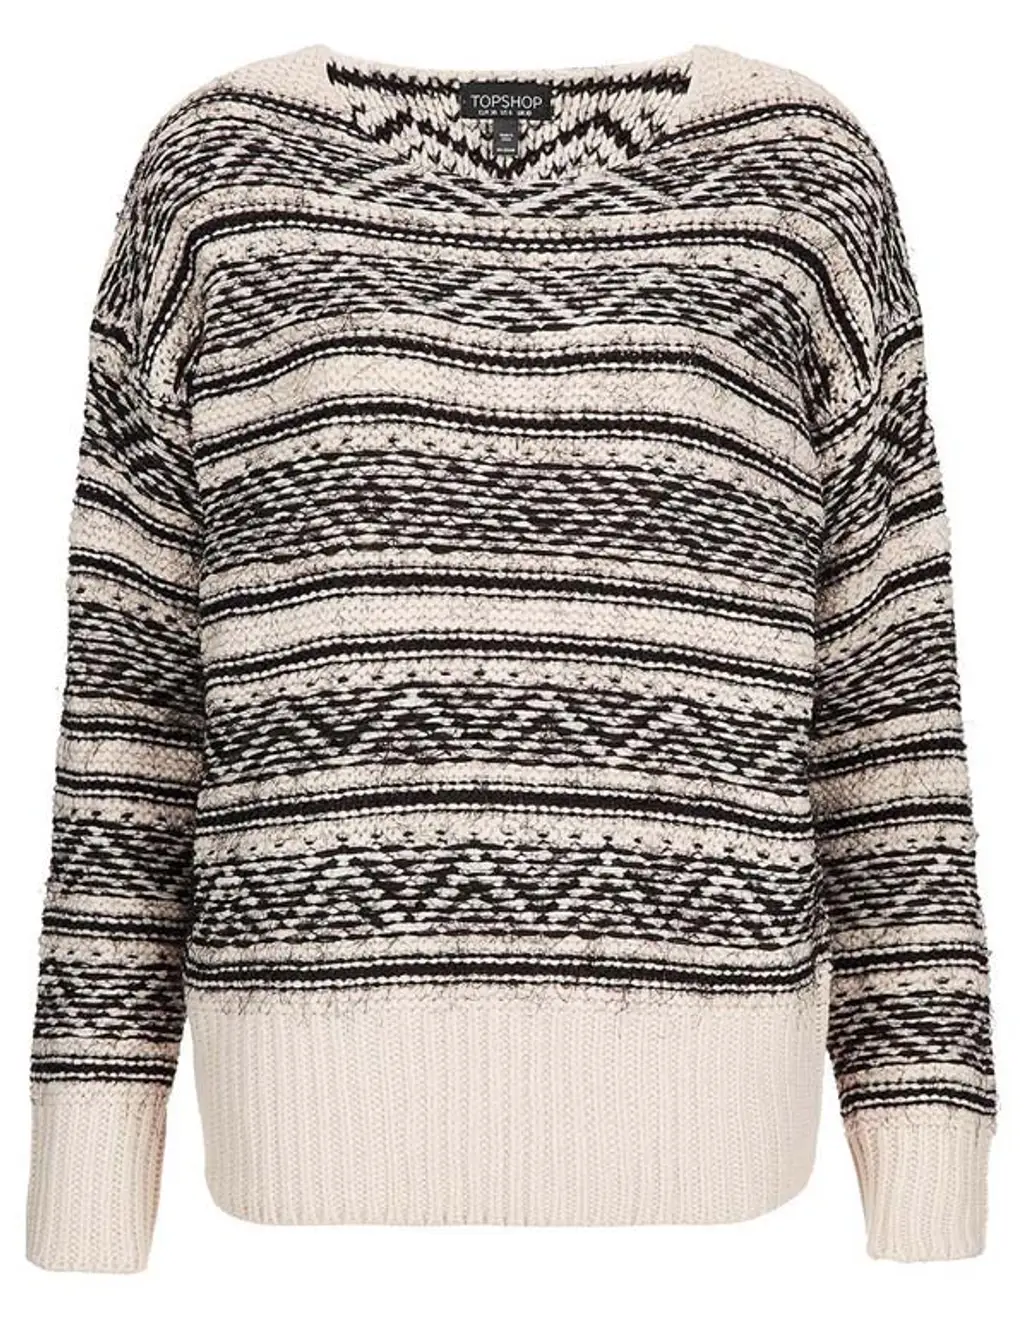 Fair Isle Knit Sweater